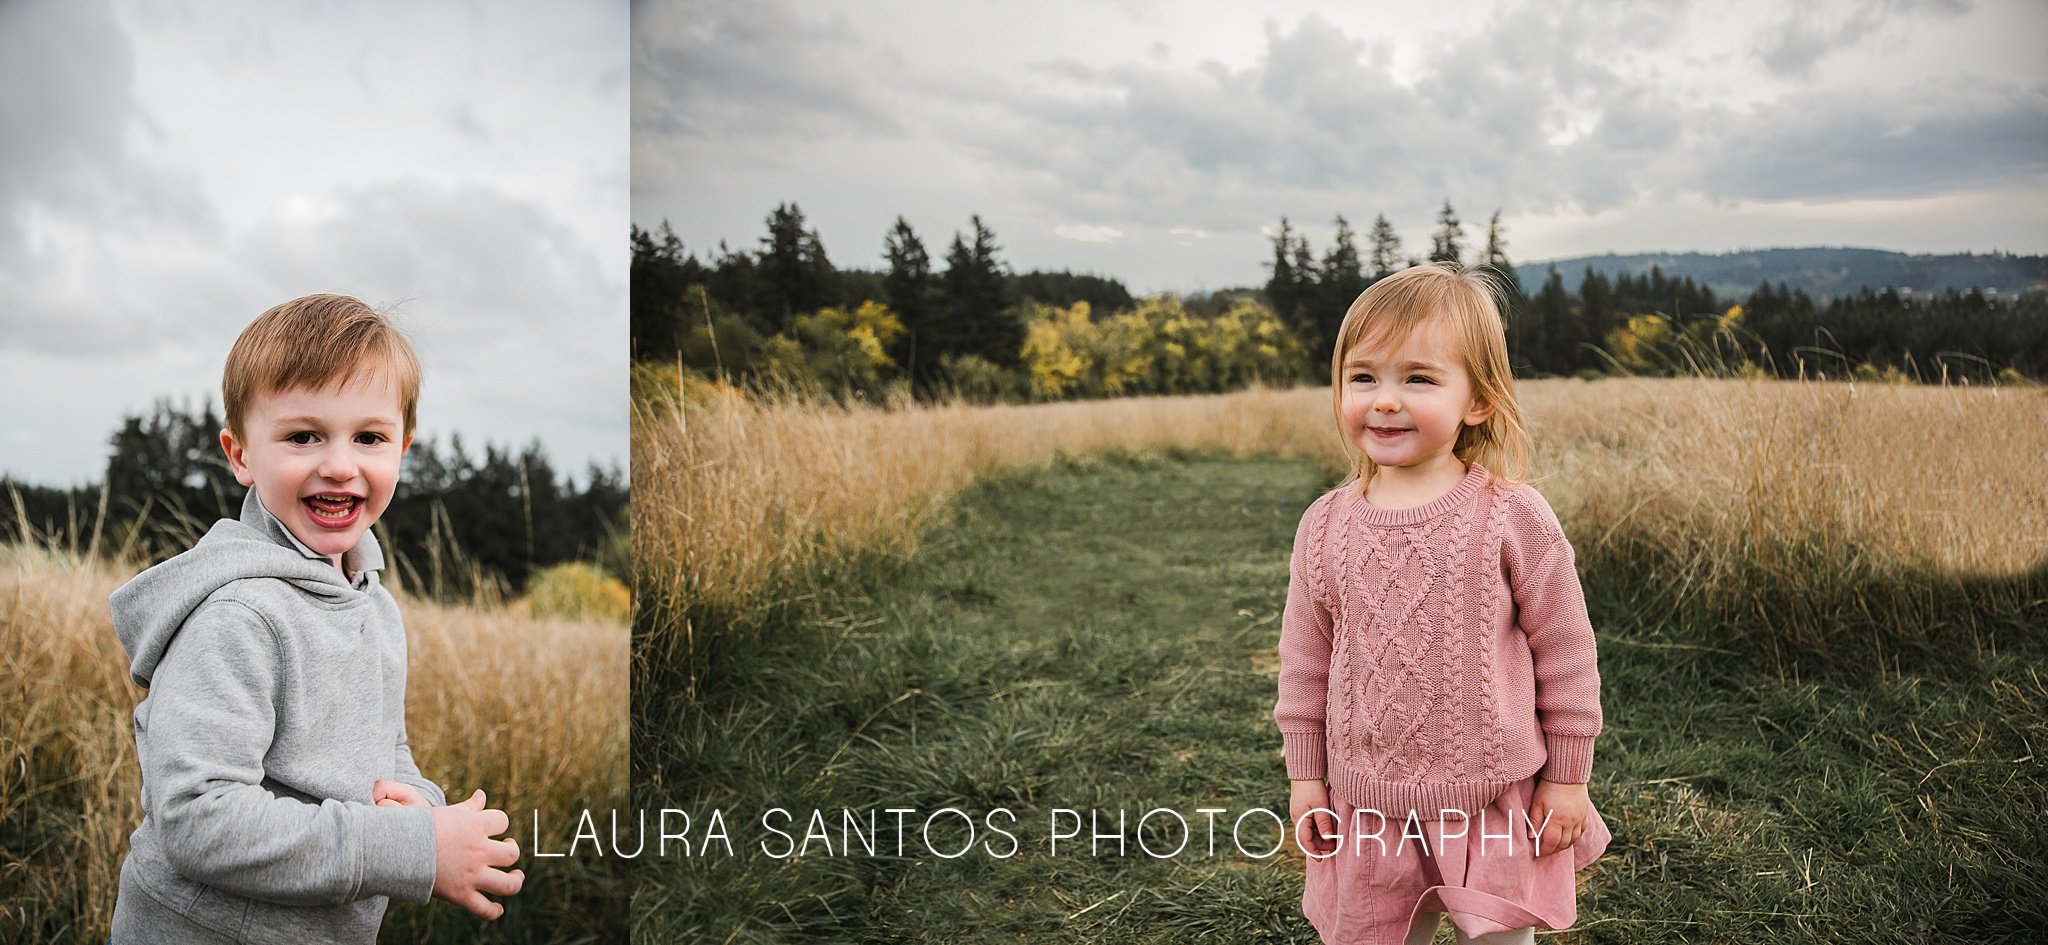 Laura Santos Photography Portland Oregon Family Photographer_2960.jpg